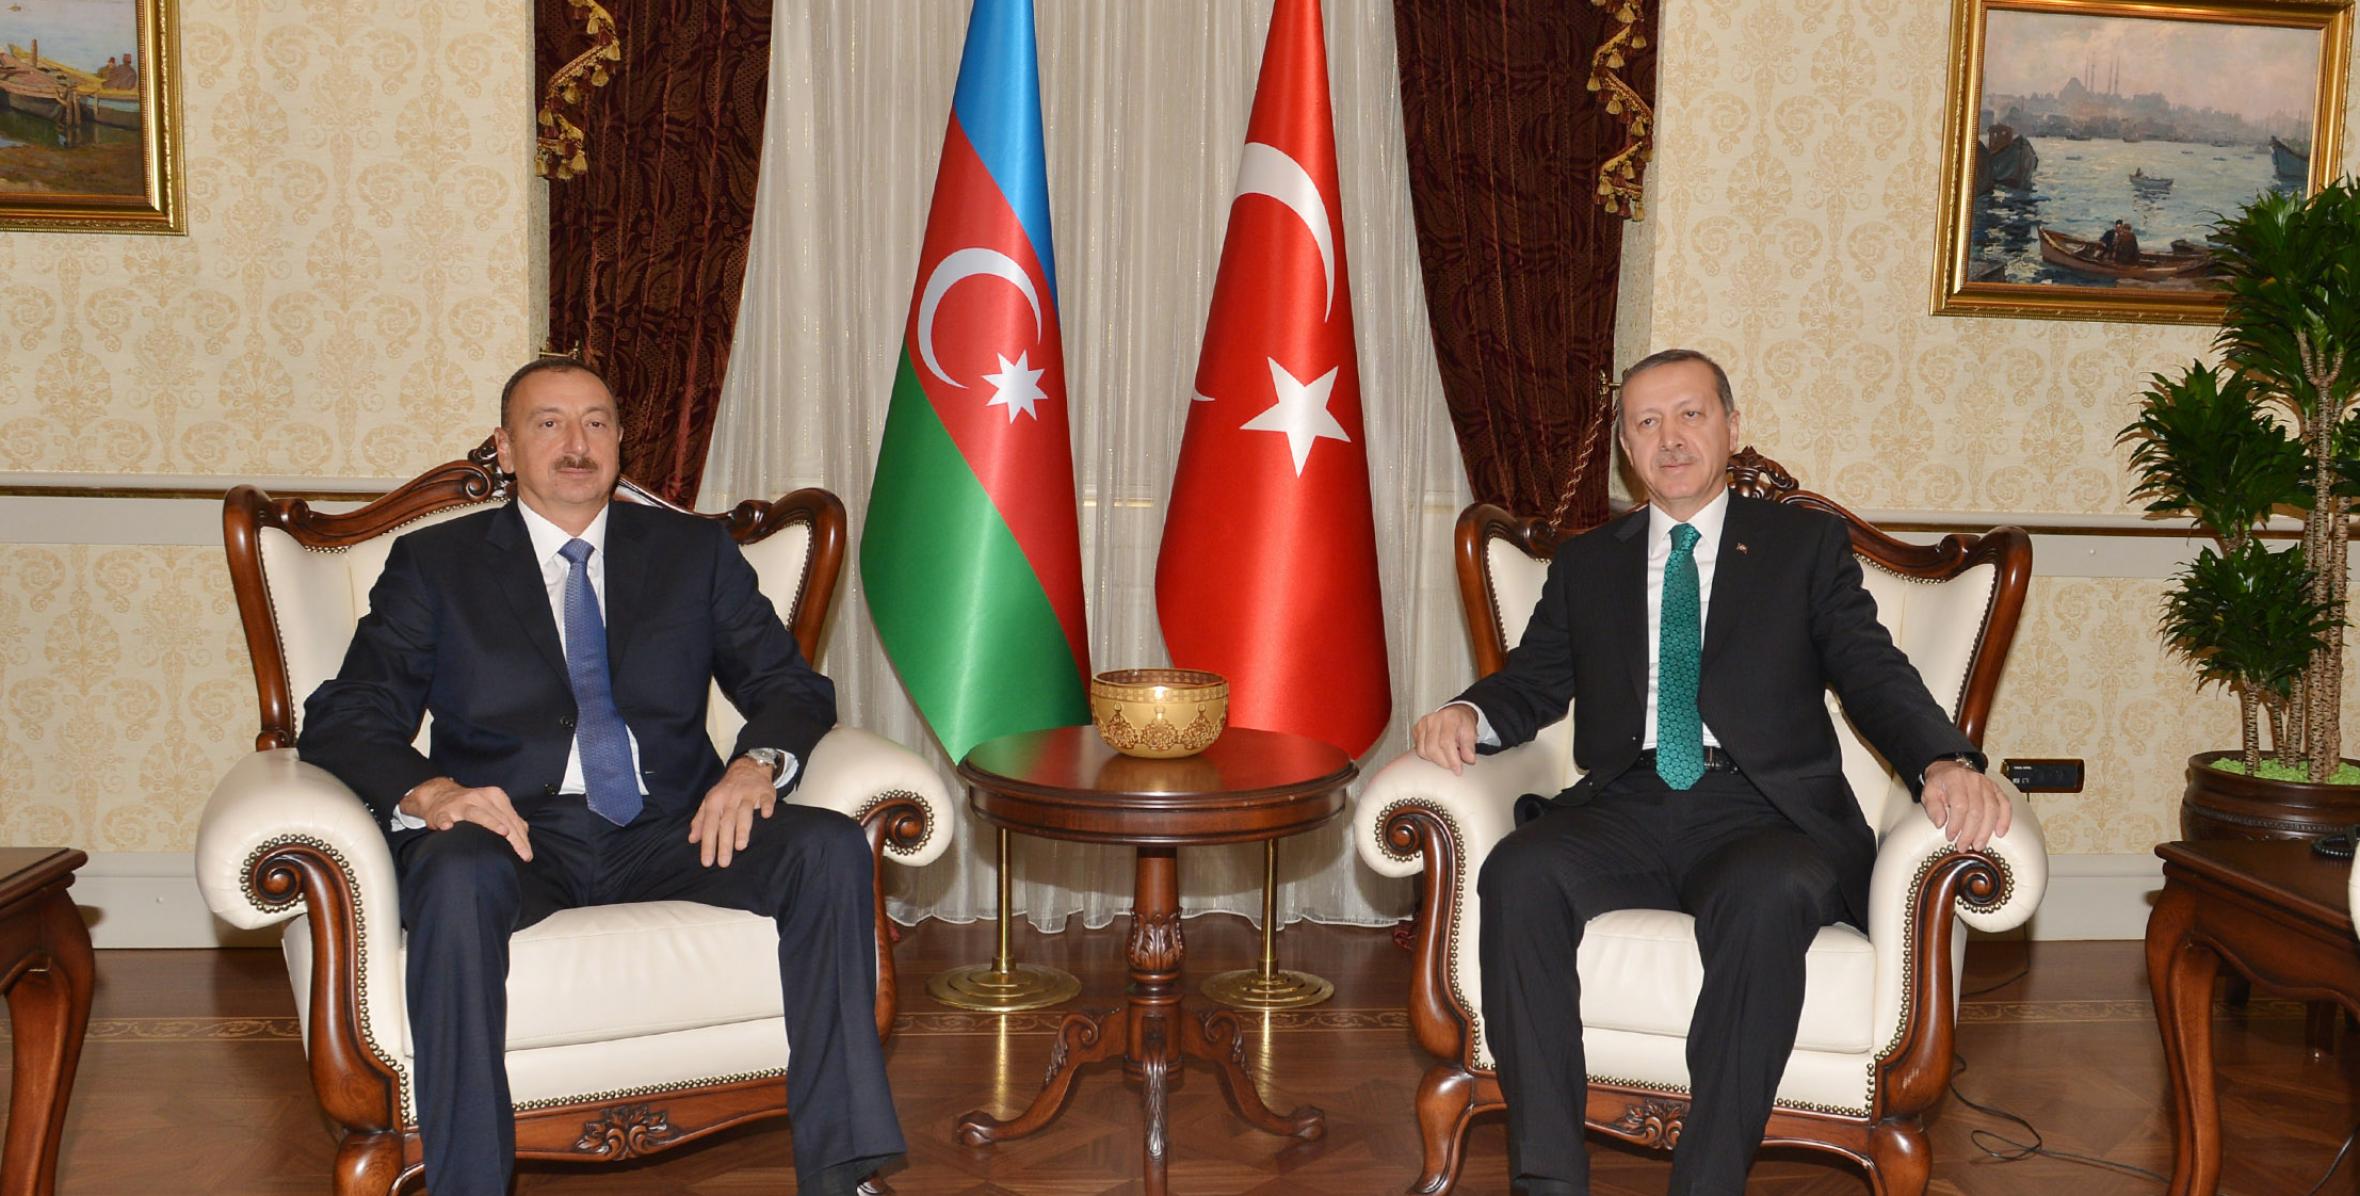 Ilham Aliyev had a meeting with Turkish Prime Minister Recep Tayyip Erdogan